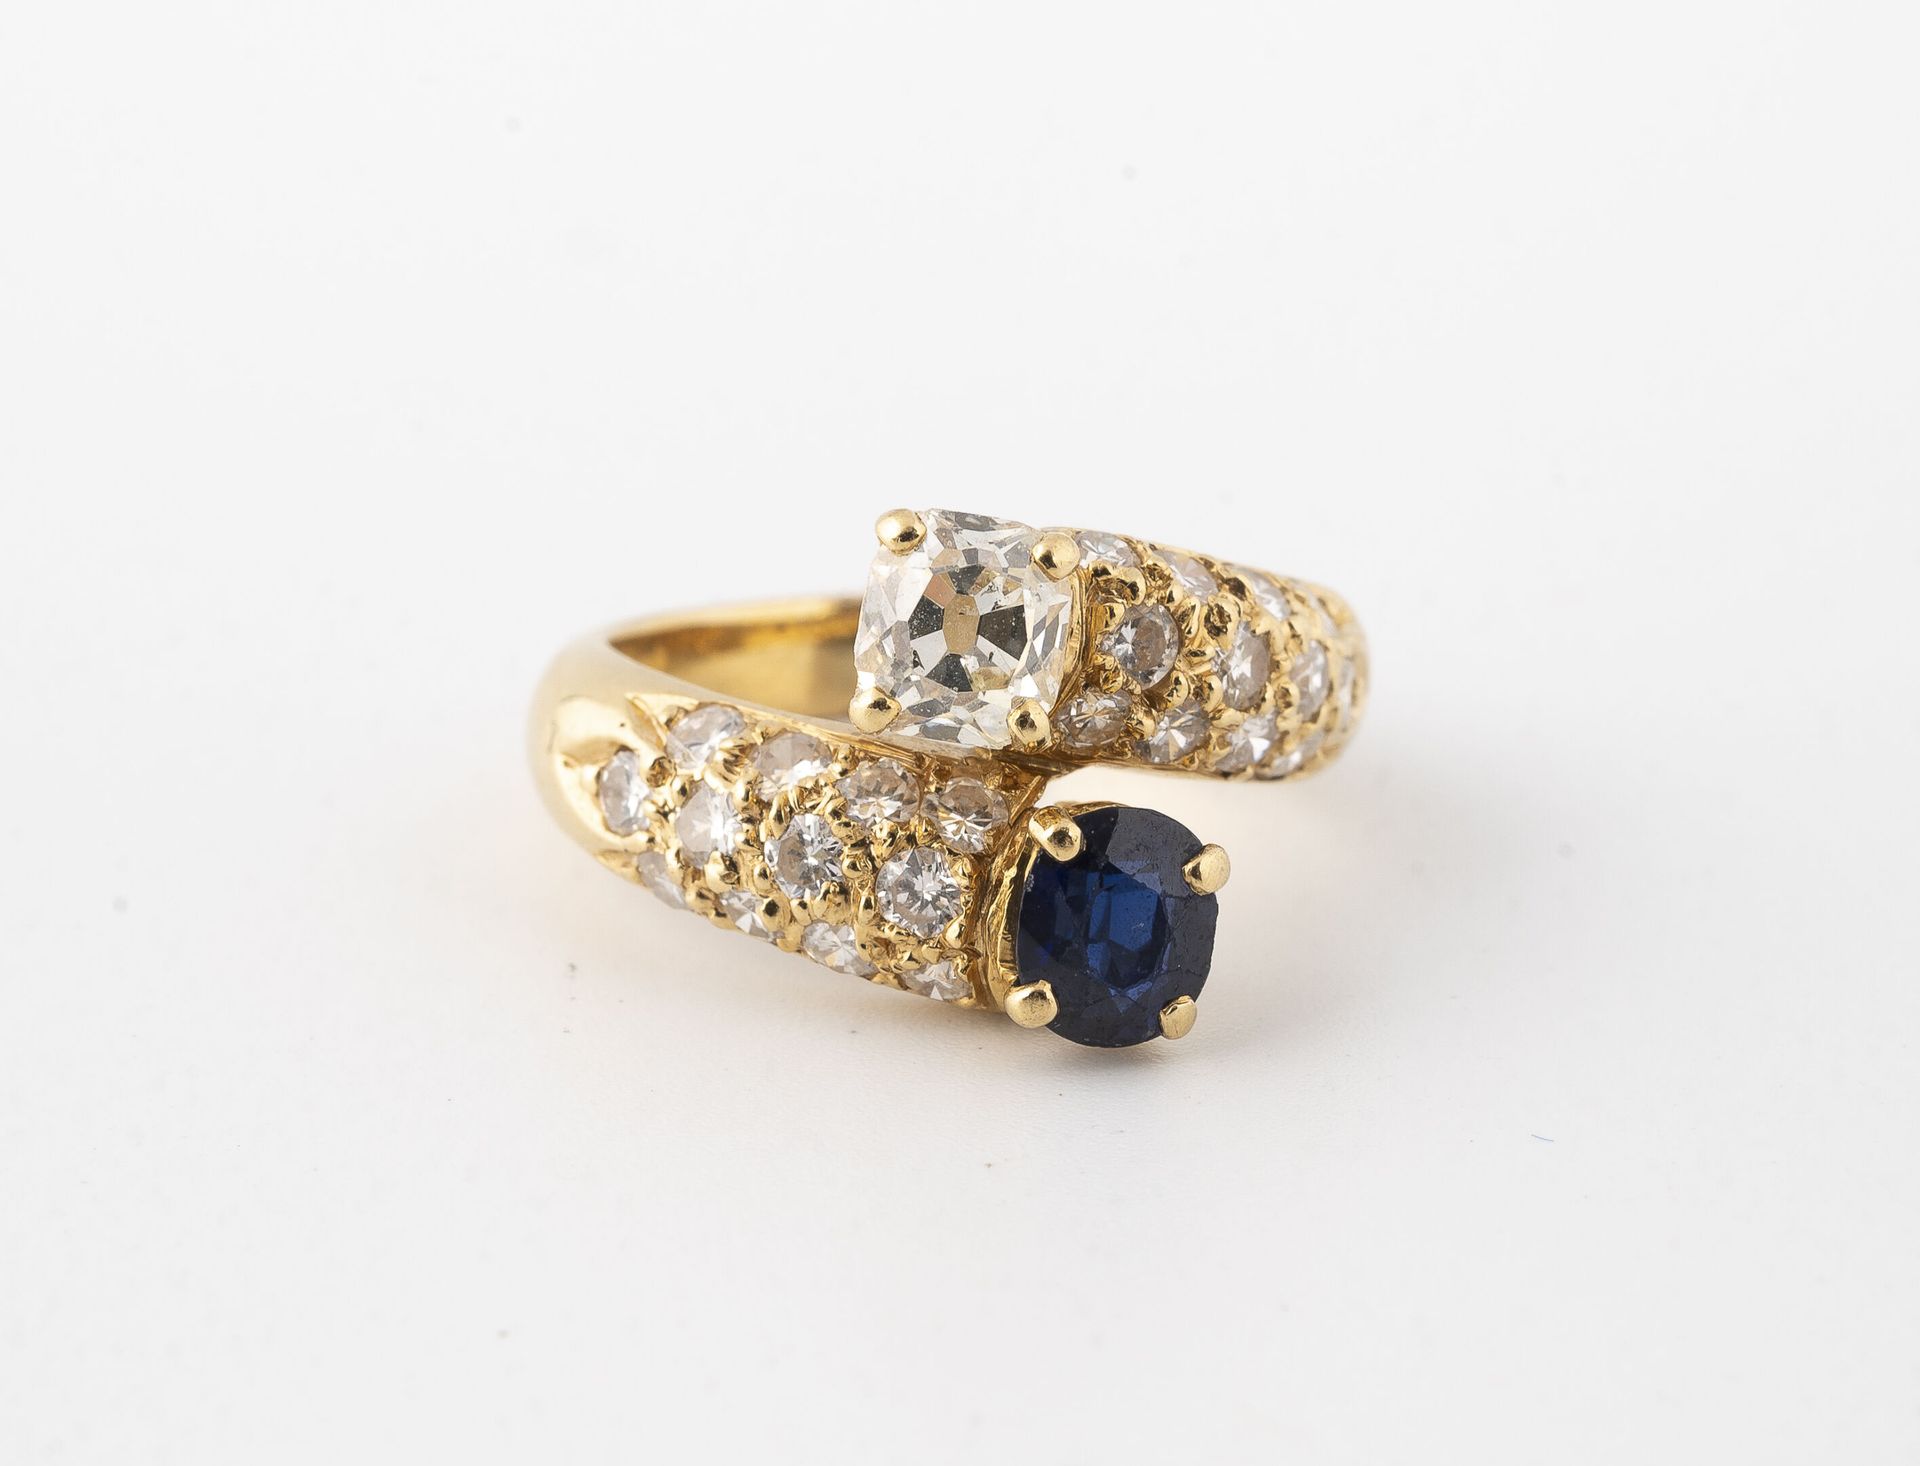 Null 黄金（750）toi et moi戒指，镶有一颗爪形切割的老式钻石和一颗可能是合成的蓝宝石，由小钻石支撑。

毛重：5.5克 - 手指大小：47。

&hellip;